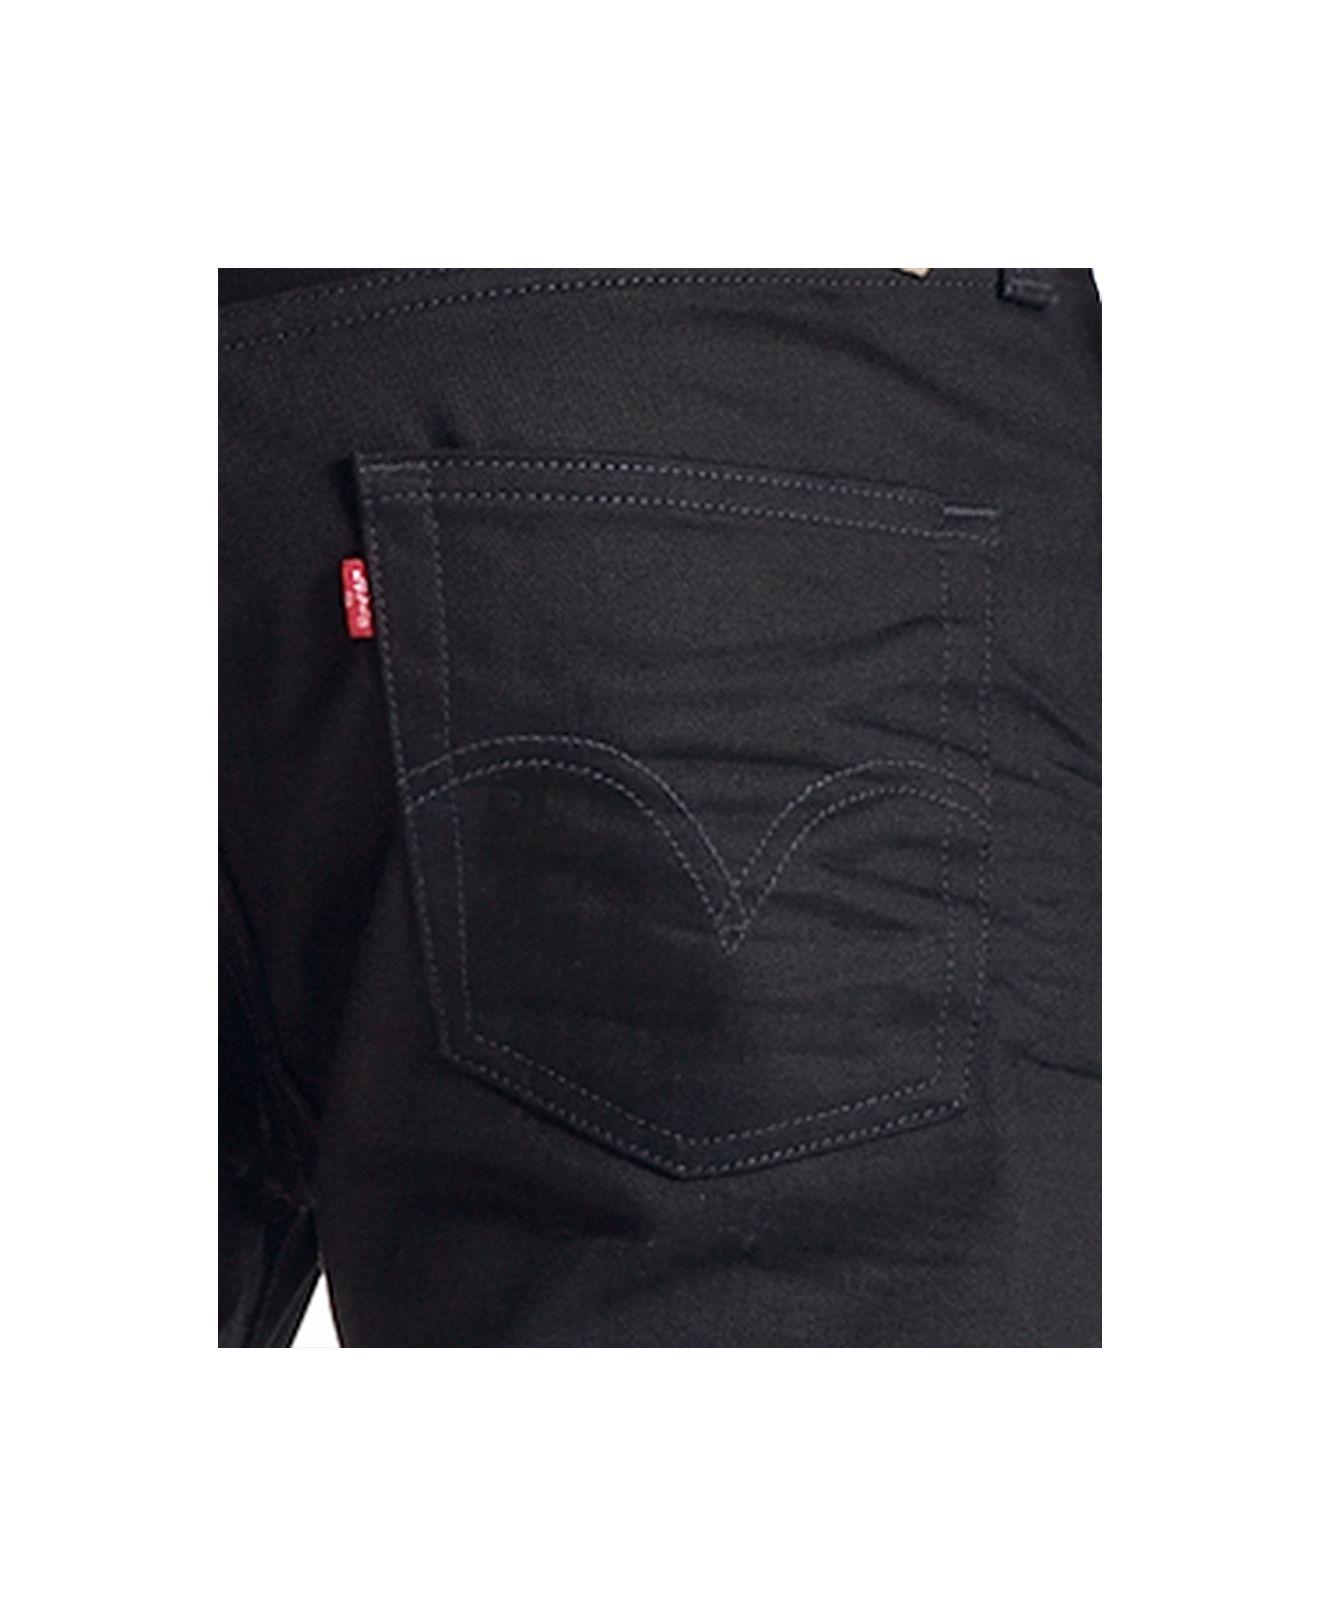 Levi's Denim 501 Original-fit Jeans in Nickel Black (Black) for Men - Lyst